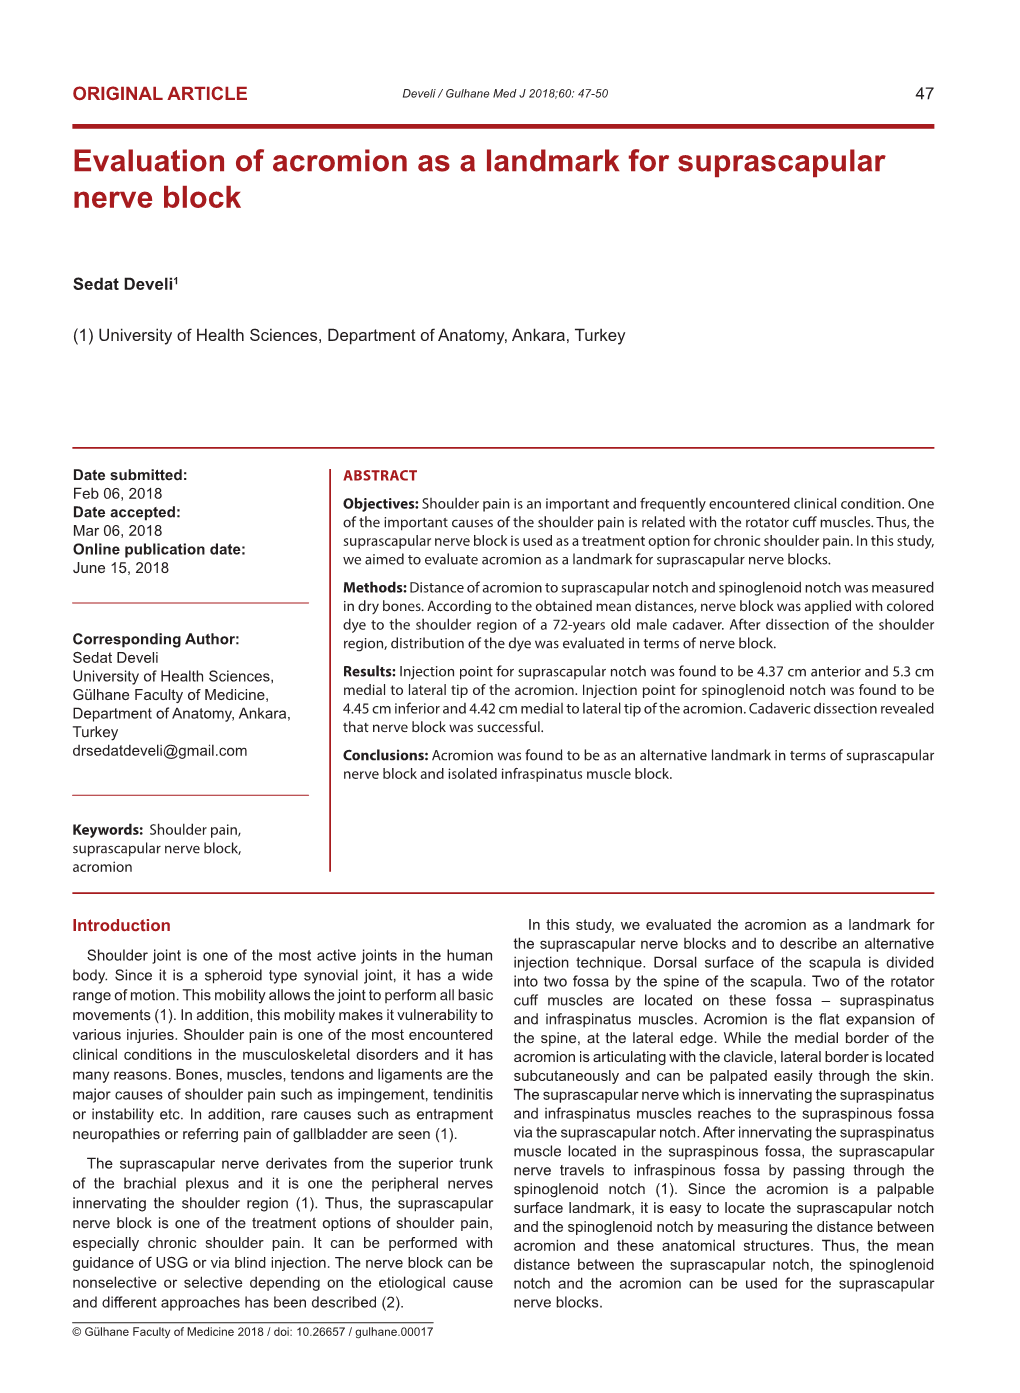 Evaluation of Acromion As a Landmark for Suprascapular Nerve Block